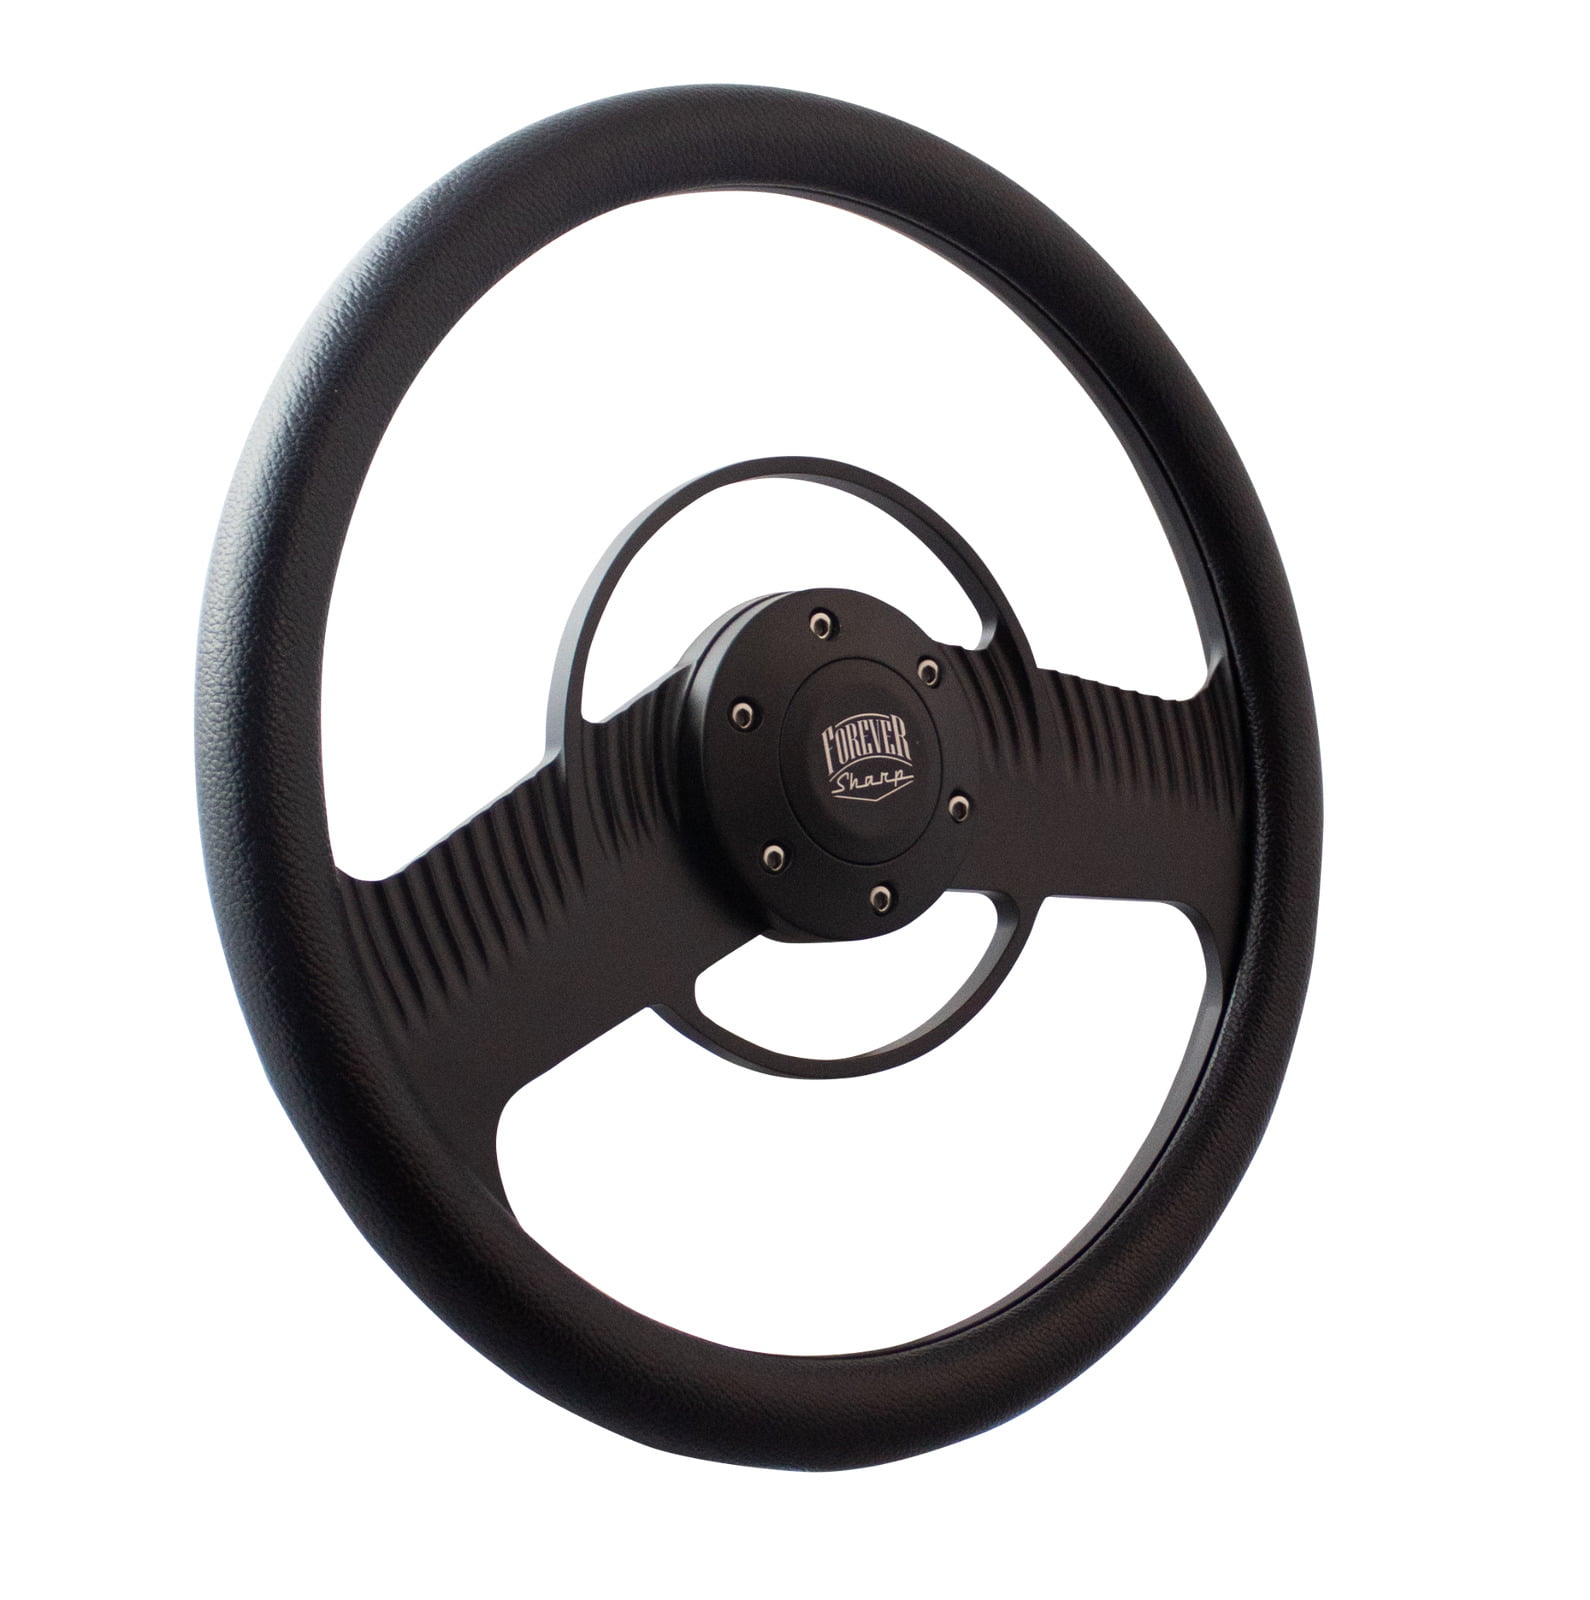 5 & 6 Hole Matte Black Hub Adapter Installation Kit B02 for Aftermarket Steering Wheels 